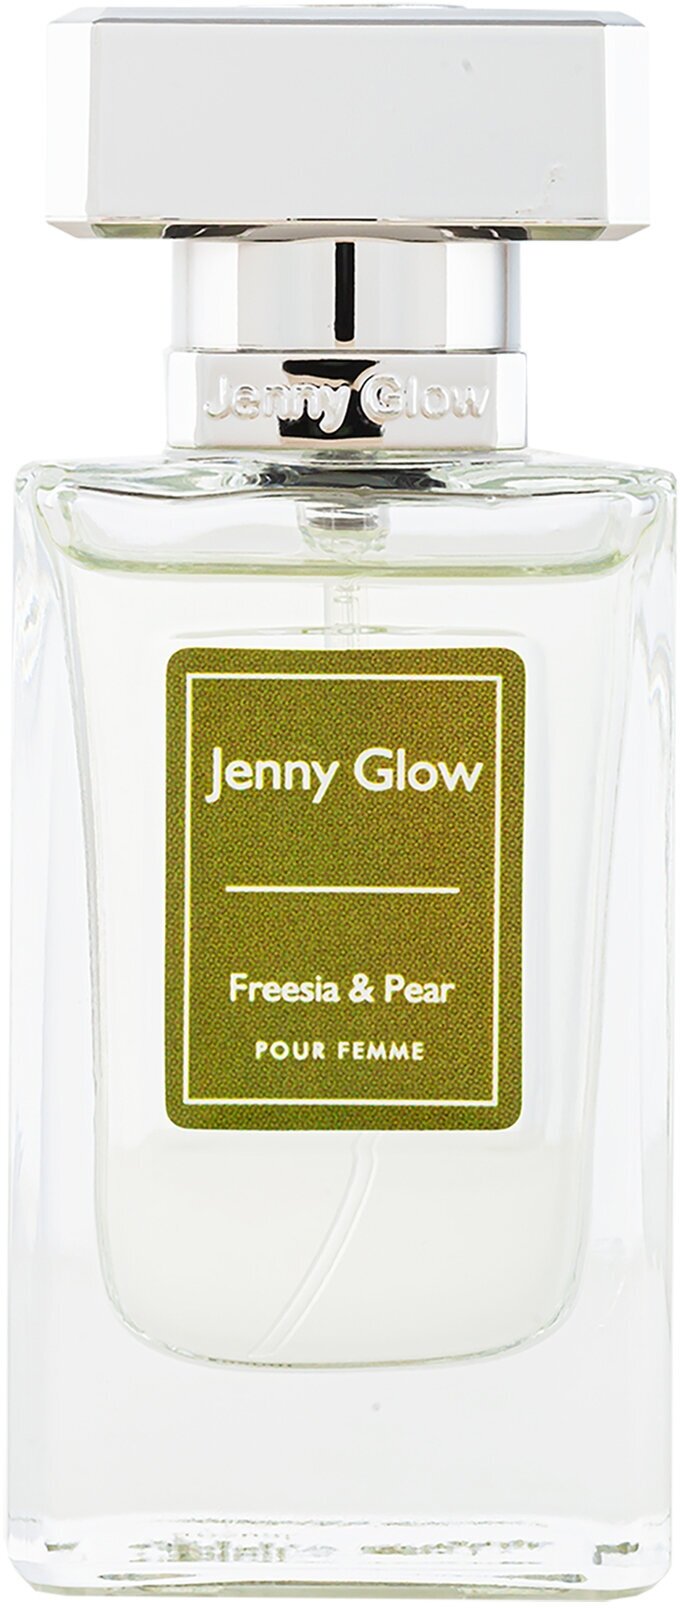 JENNY GLOW Freesia & Pear Парфюмерная вода жен, 30 мл